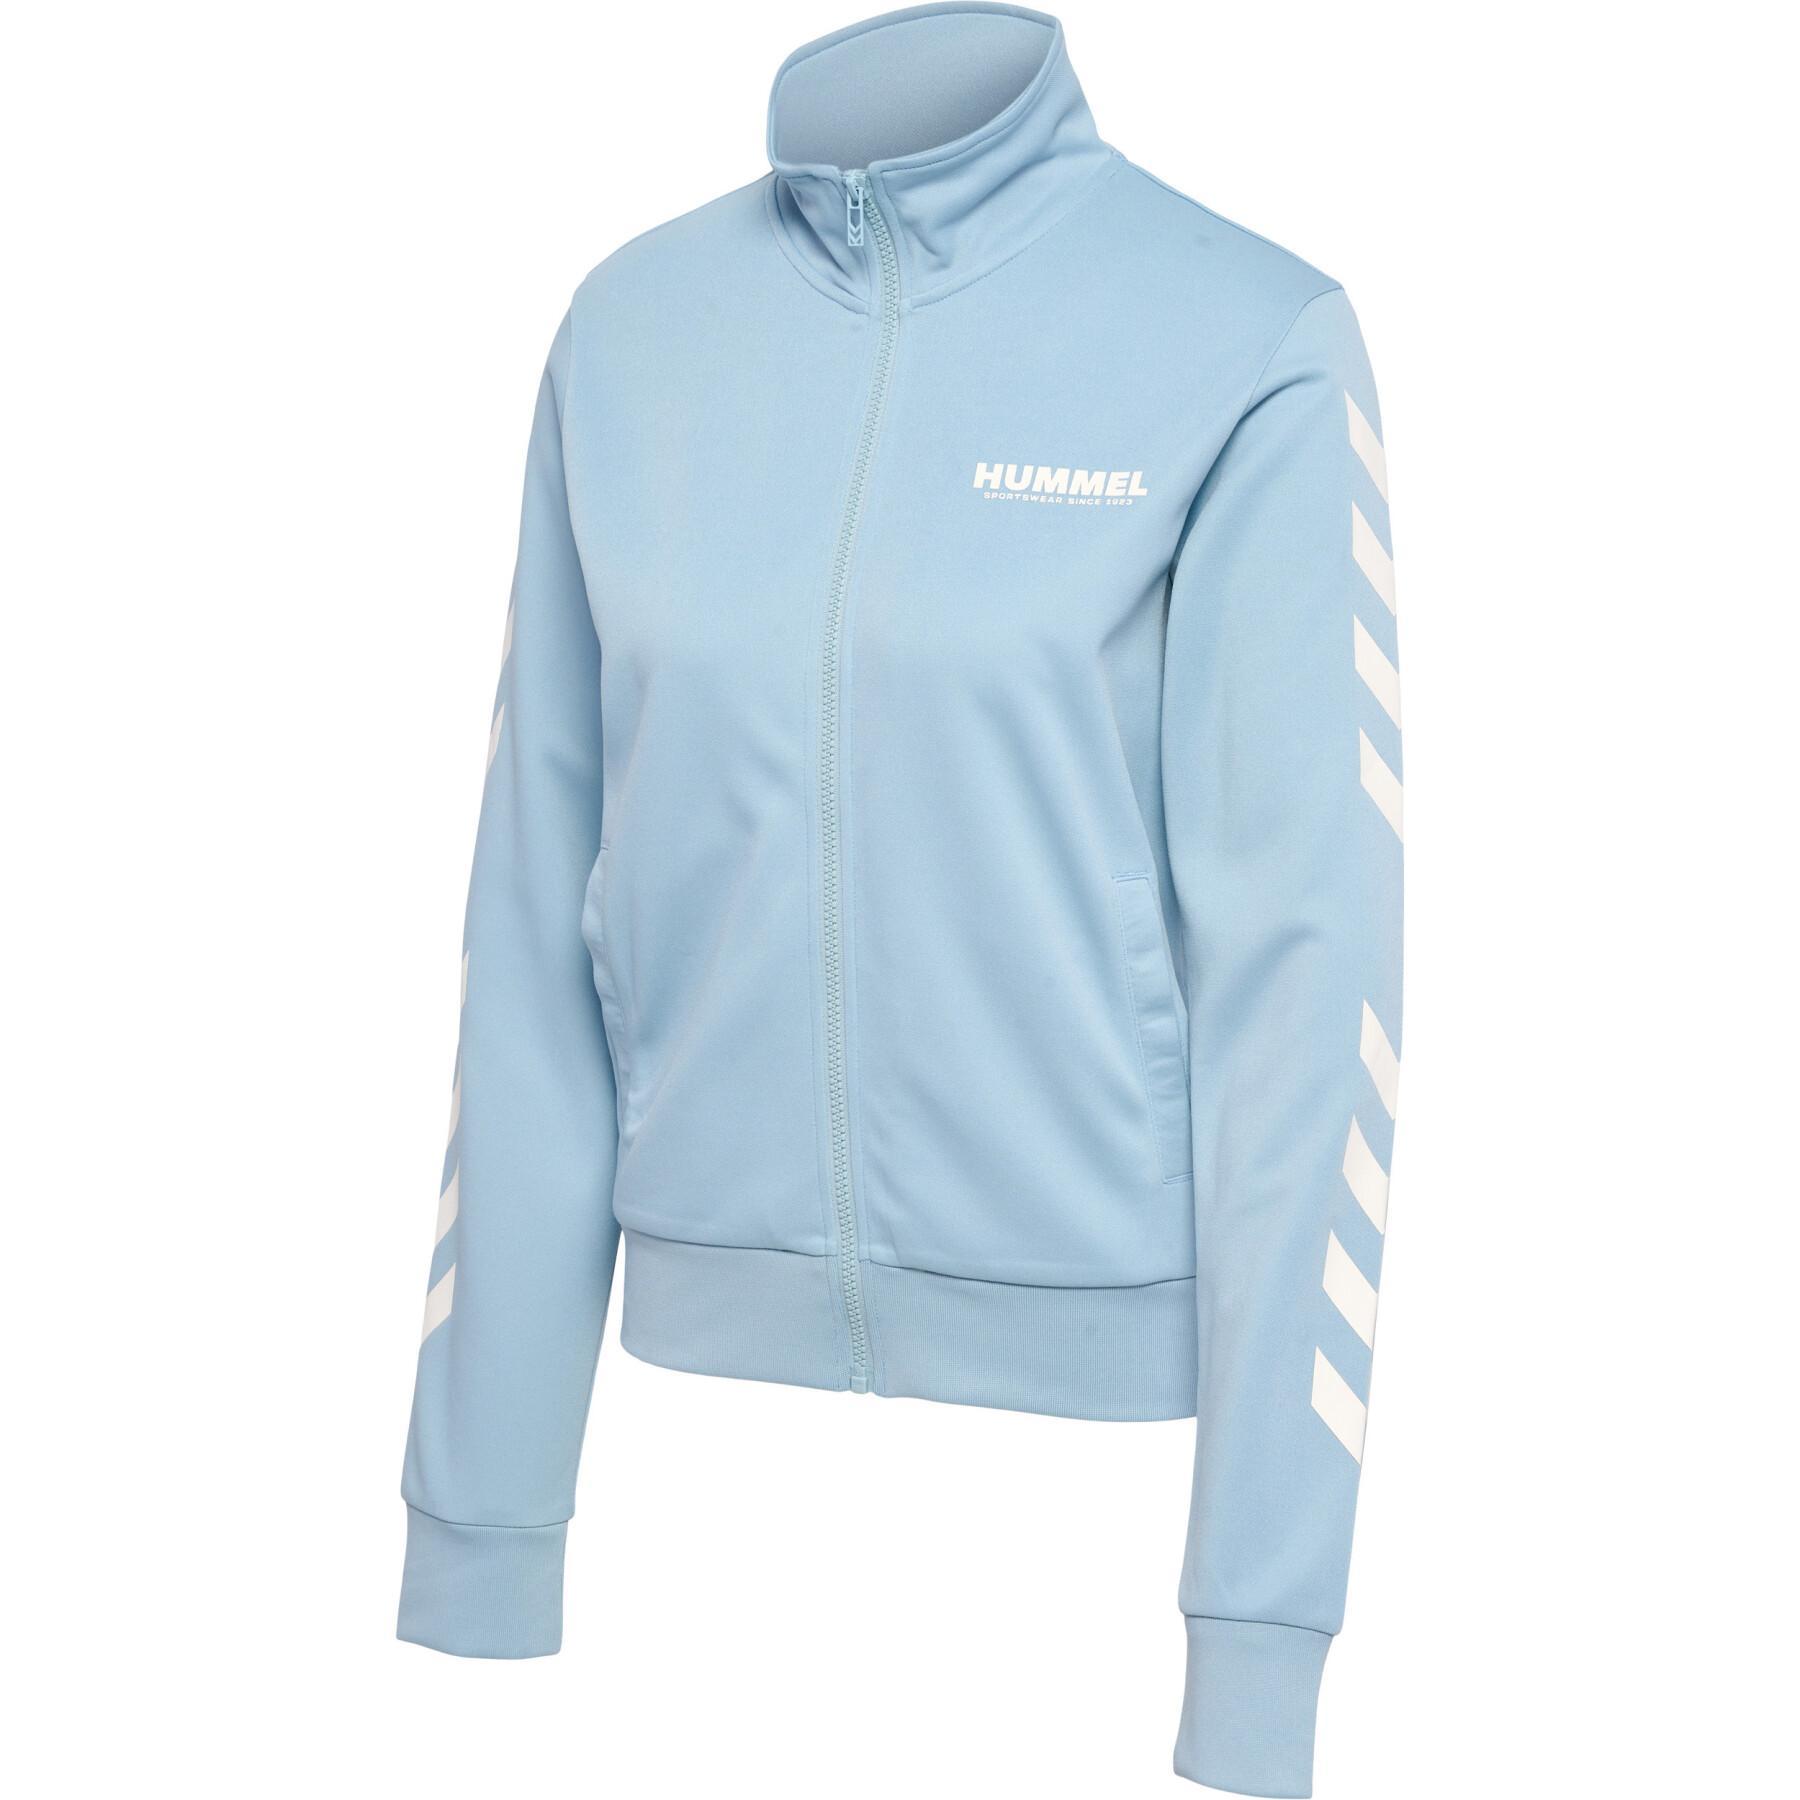 Women\'s zip-up tracksuit jacket Hummel Legacy - Hummel - Brands -  Volleyball wear